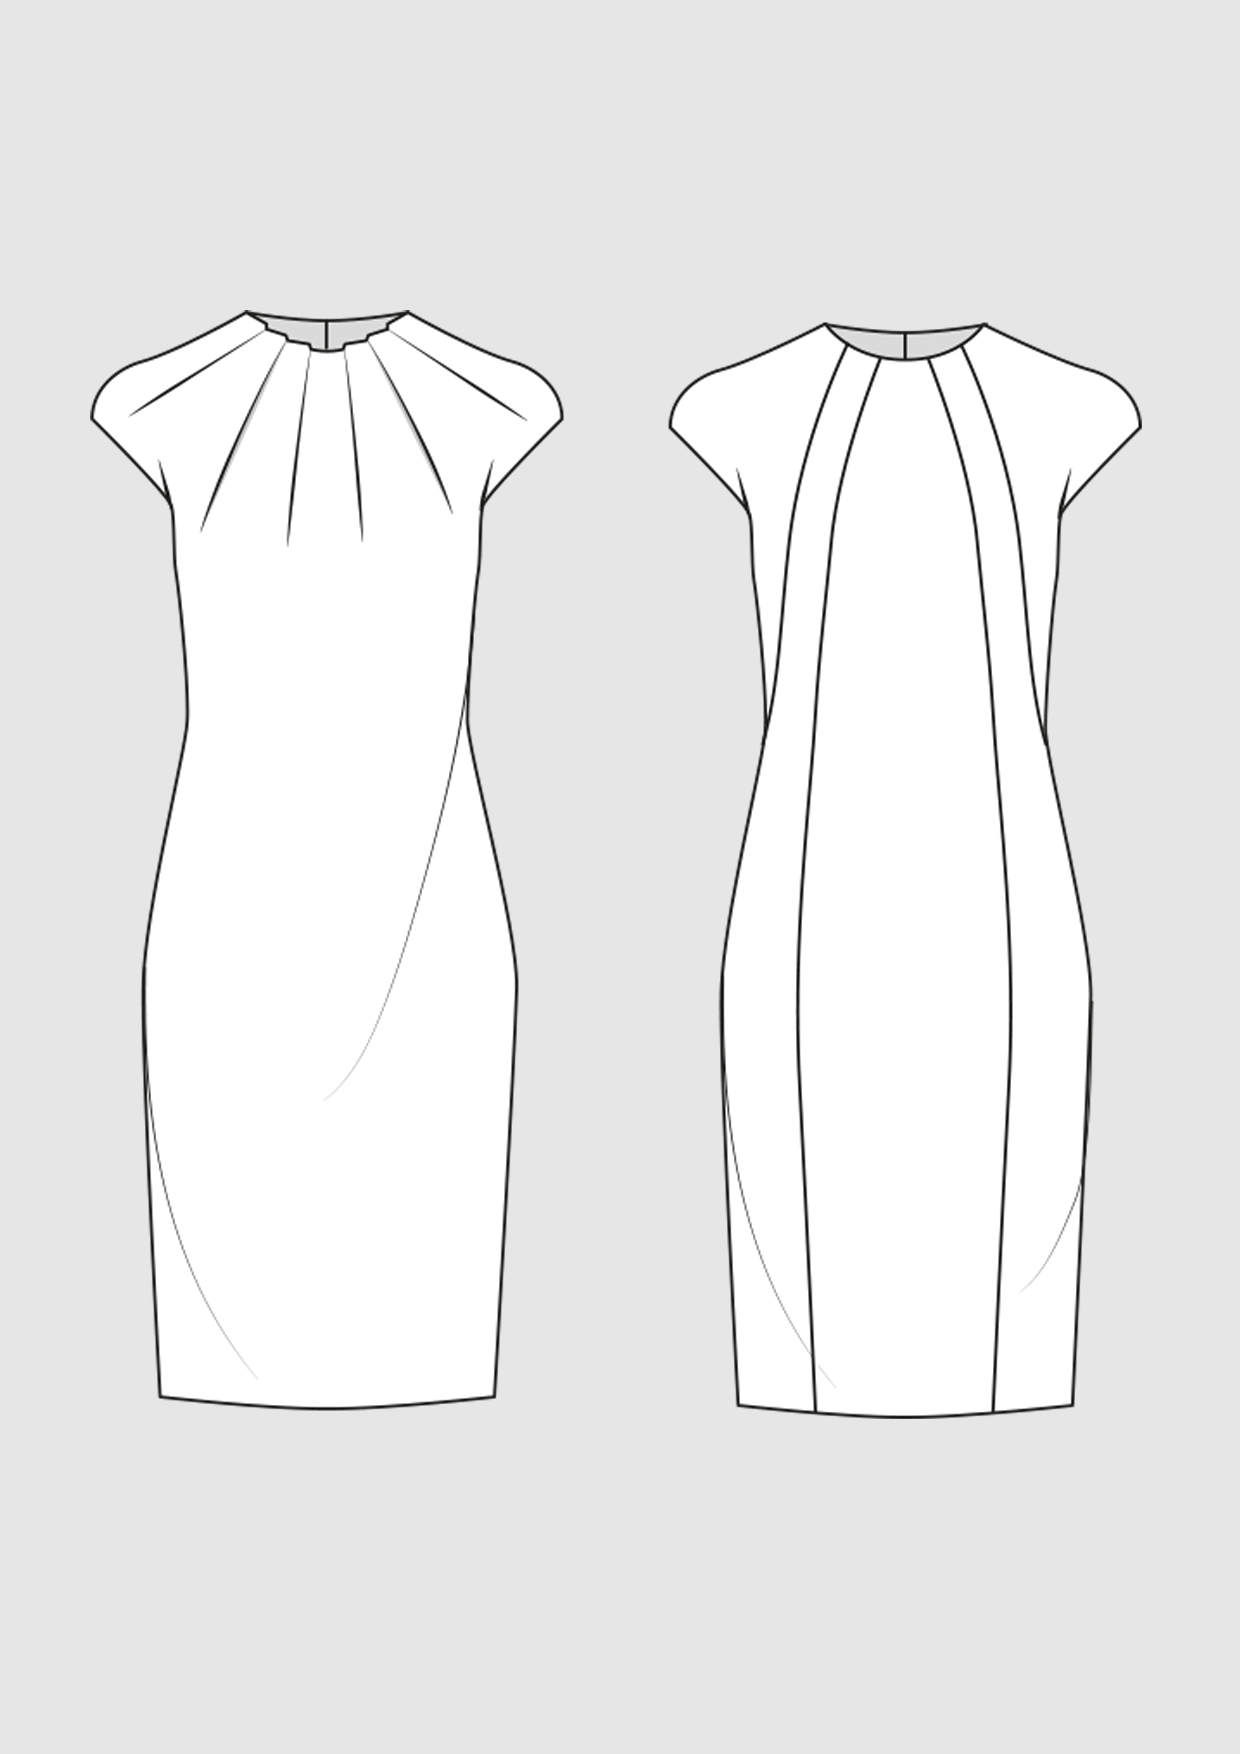 Product: Pattern Sheath Dresses